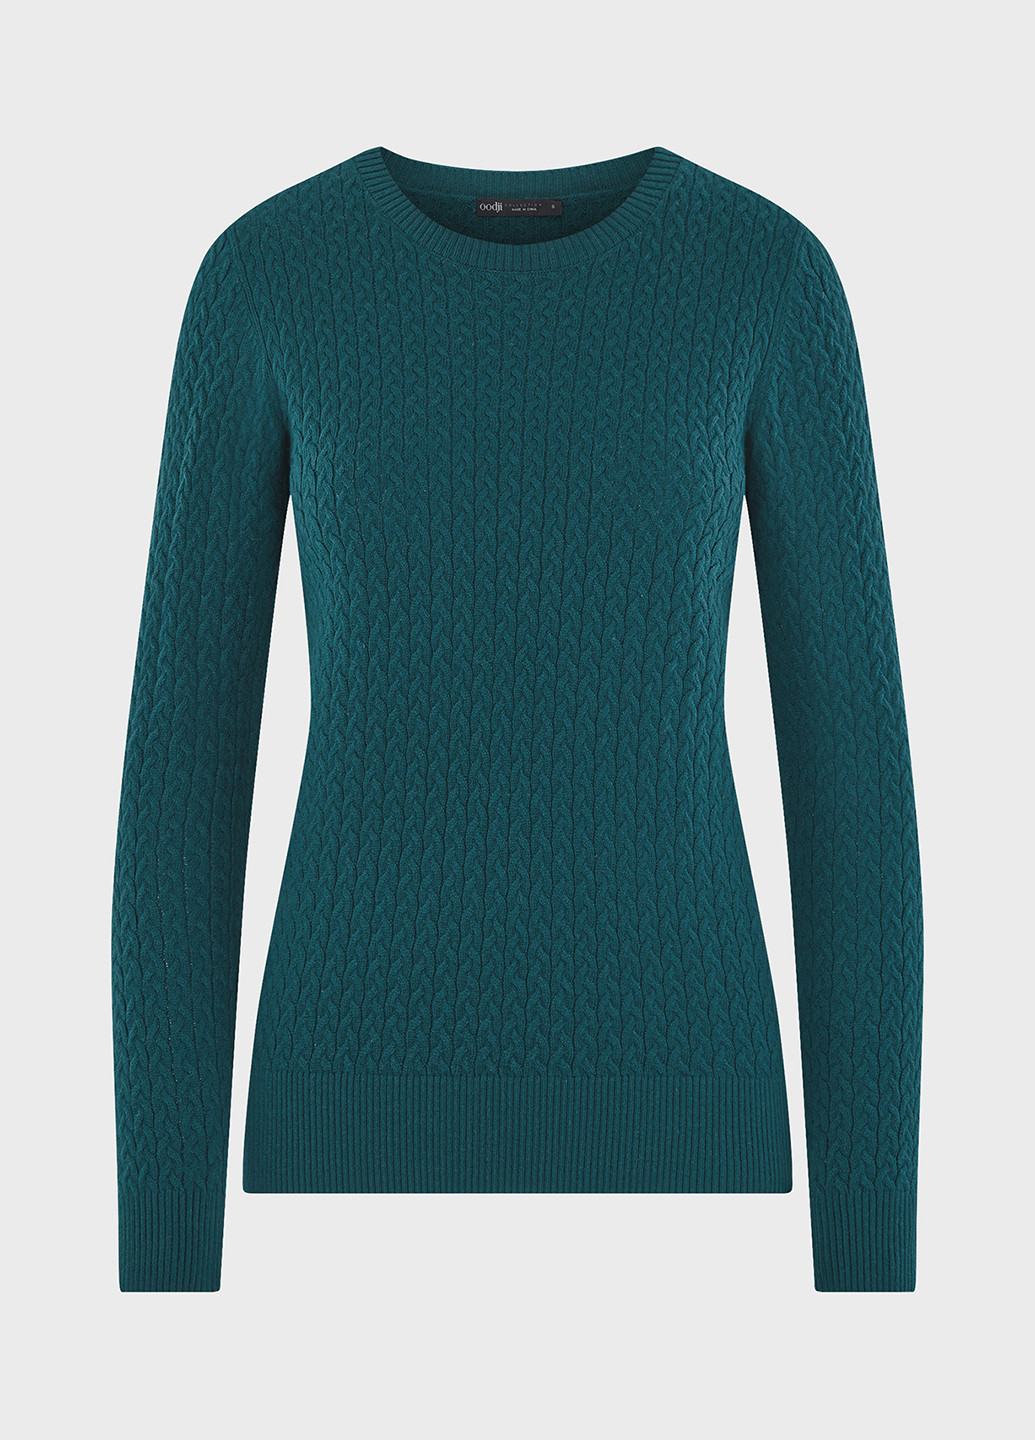 Зеленый демисезонный свитер джемпер Oodji